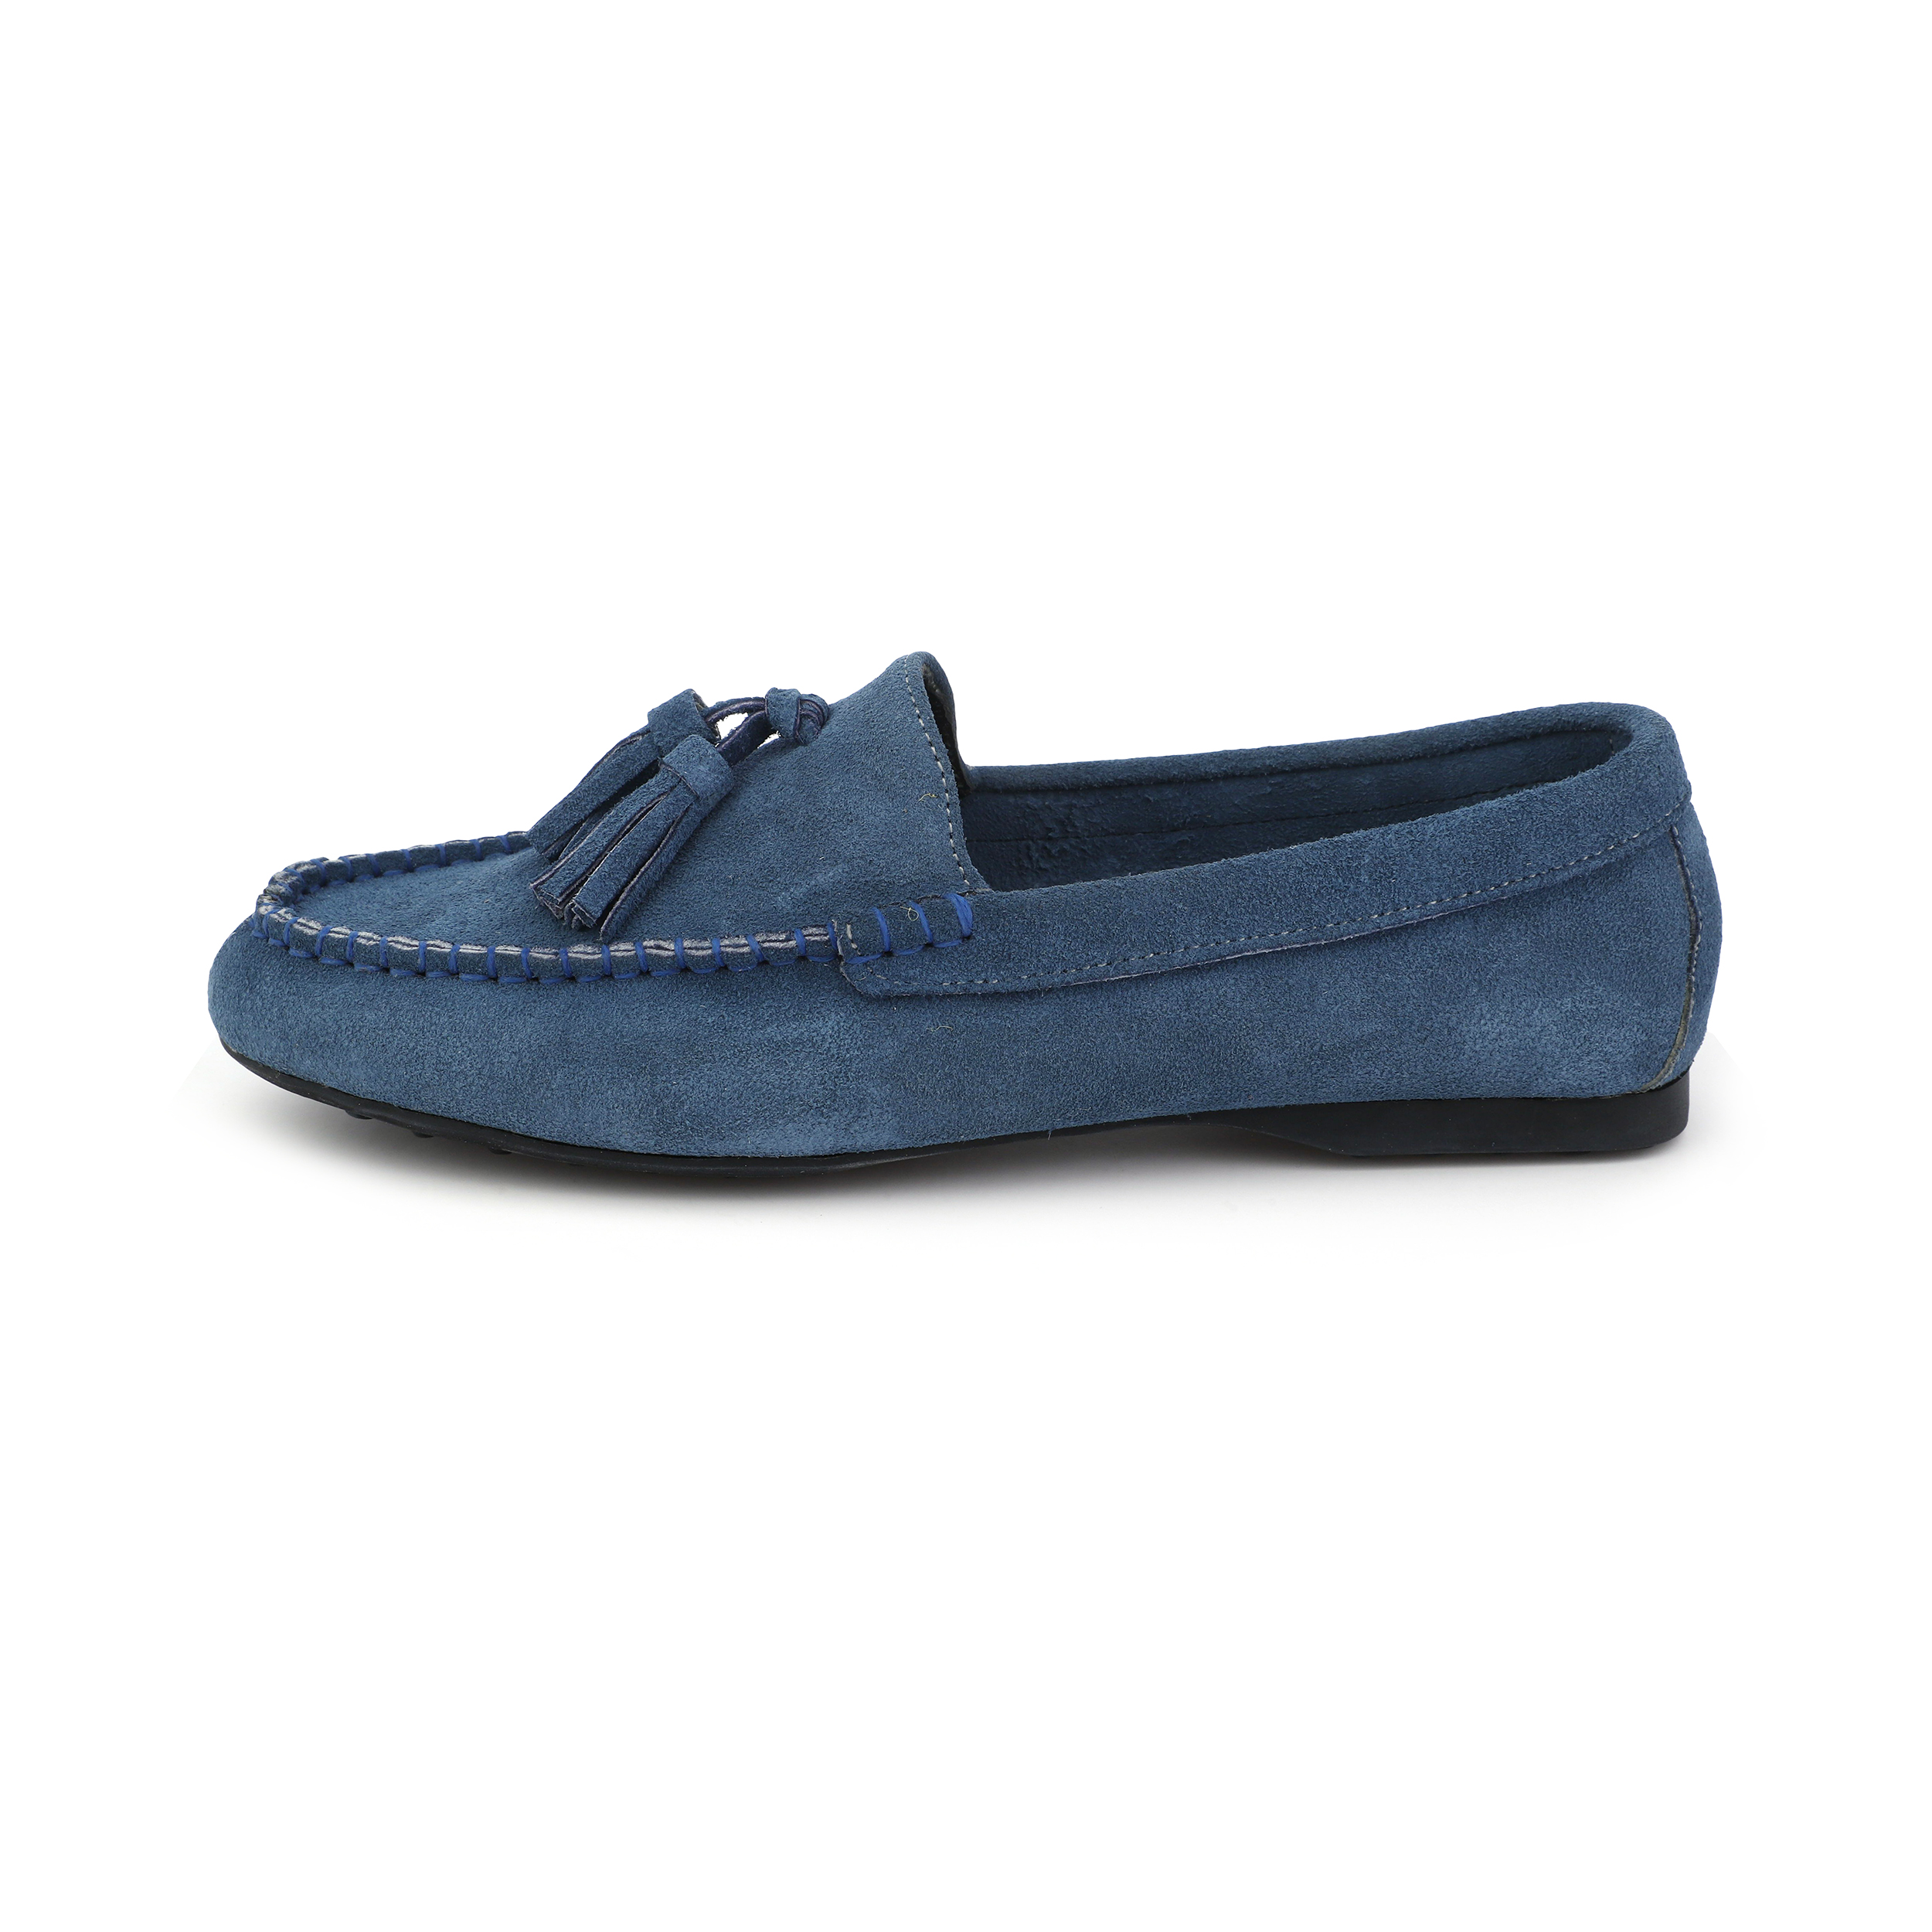  کفش کالج زنانه شوپا مدل skb1000sky blue -  - 1